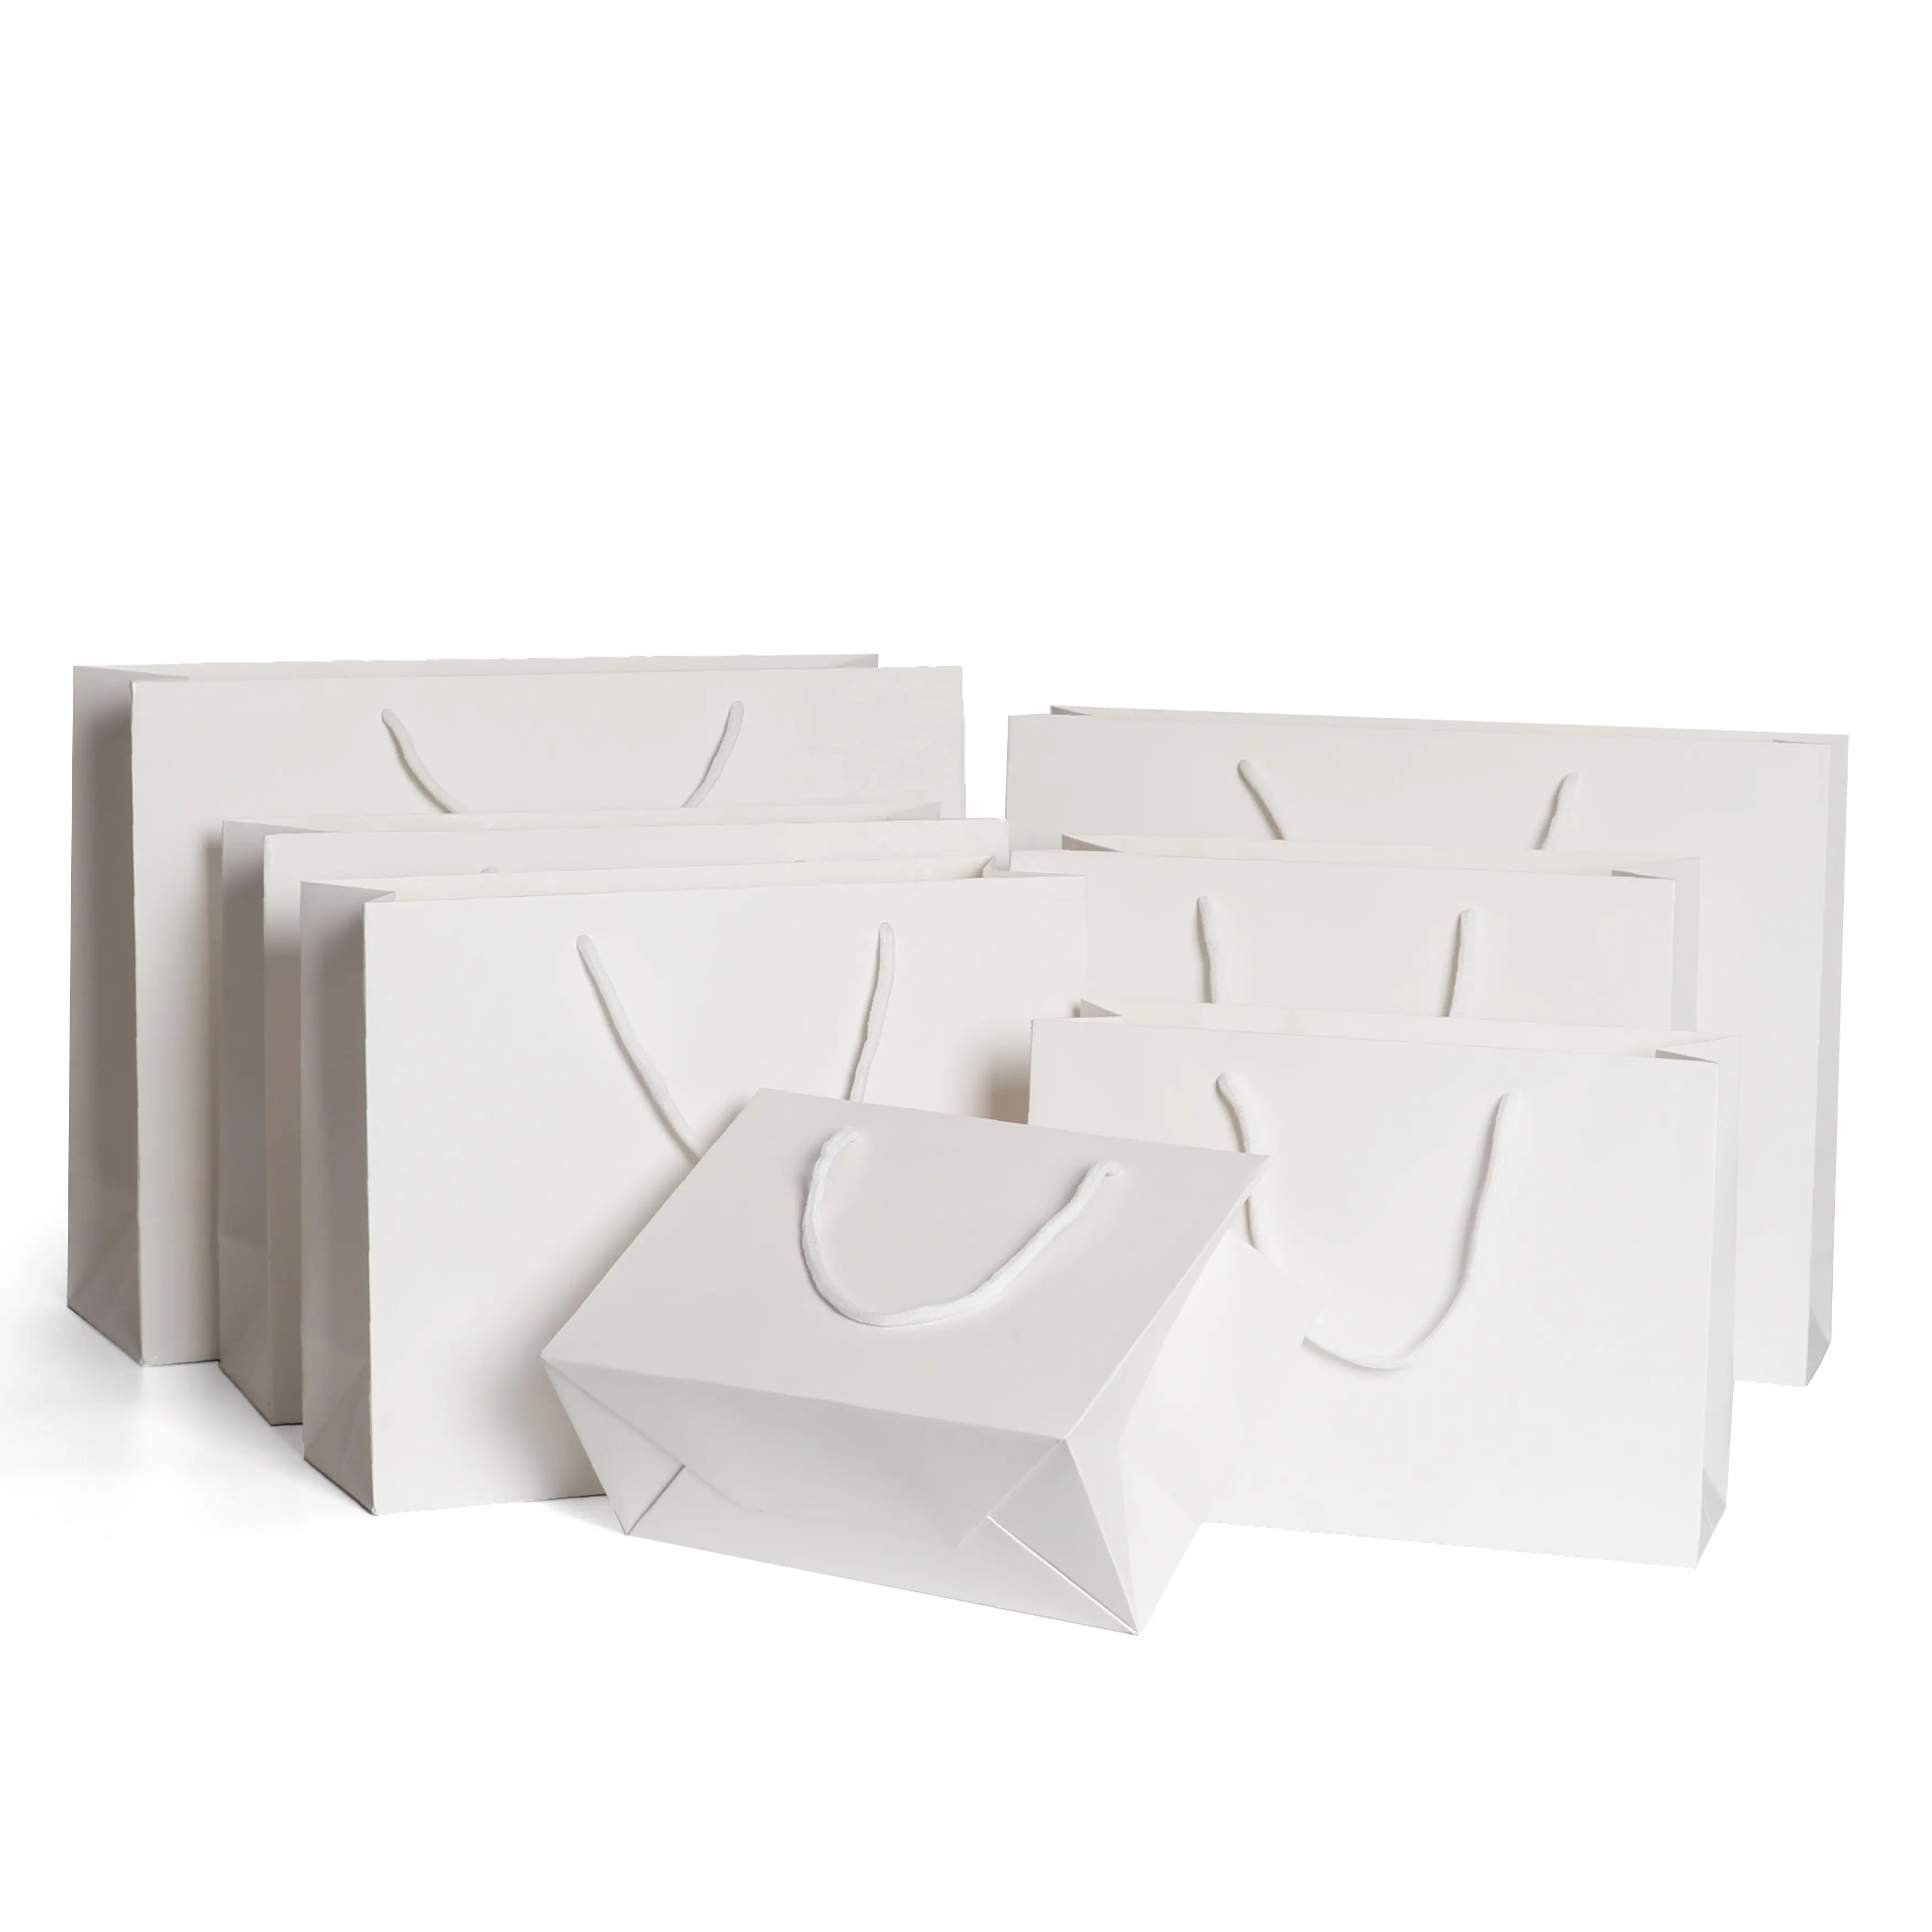 32x25x11 ซม.หนาสีขาว Tote ถุงช้อปปิ้ง Heavy Duty Original สไตล์กระดาษที่สมบูรณ์แบบสำหรับสินค้าขายปลีก,ปาร์ตี้,ของขวัญ